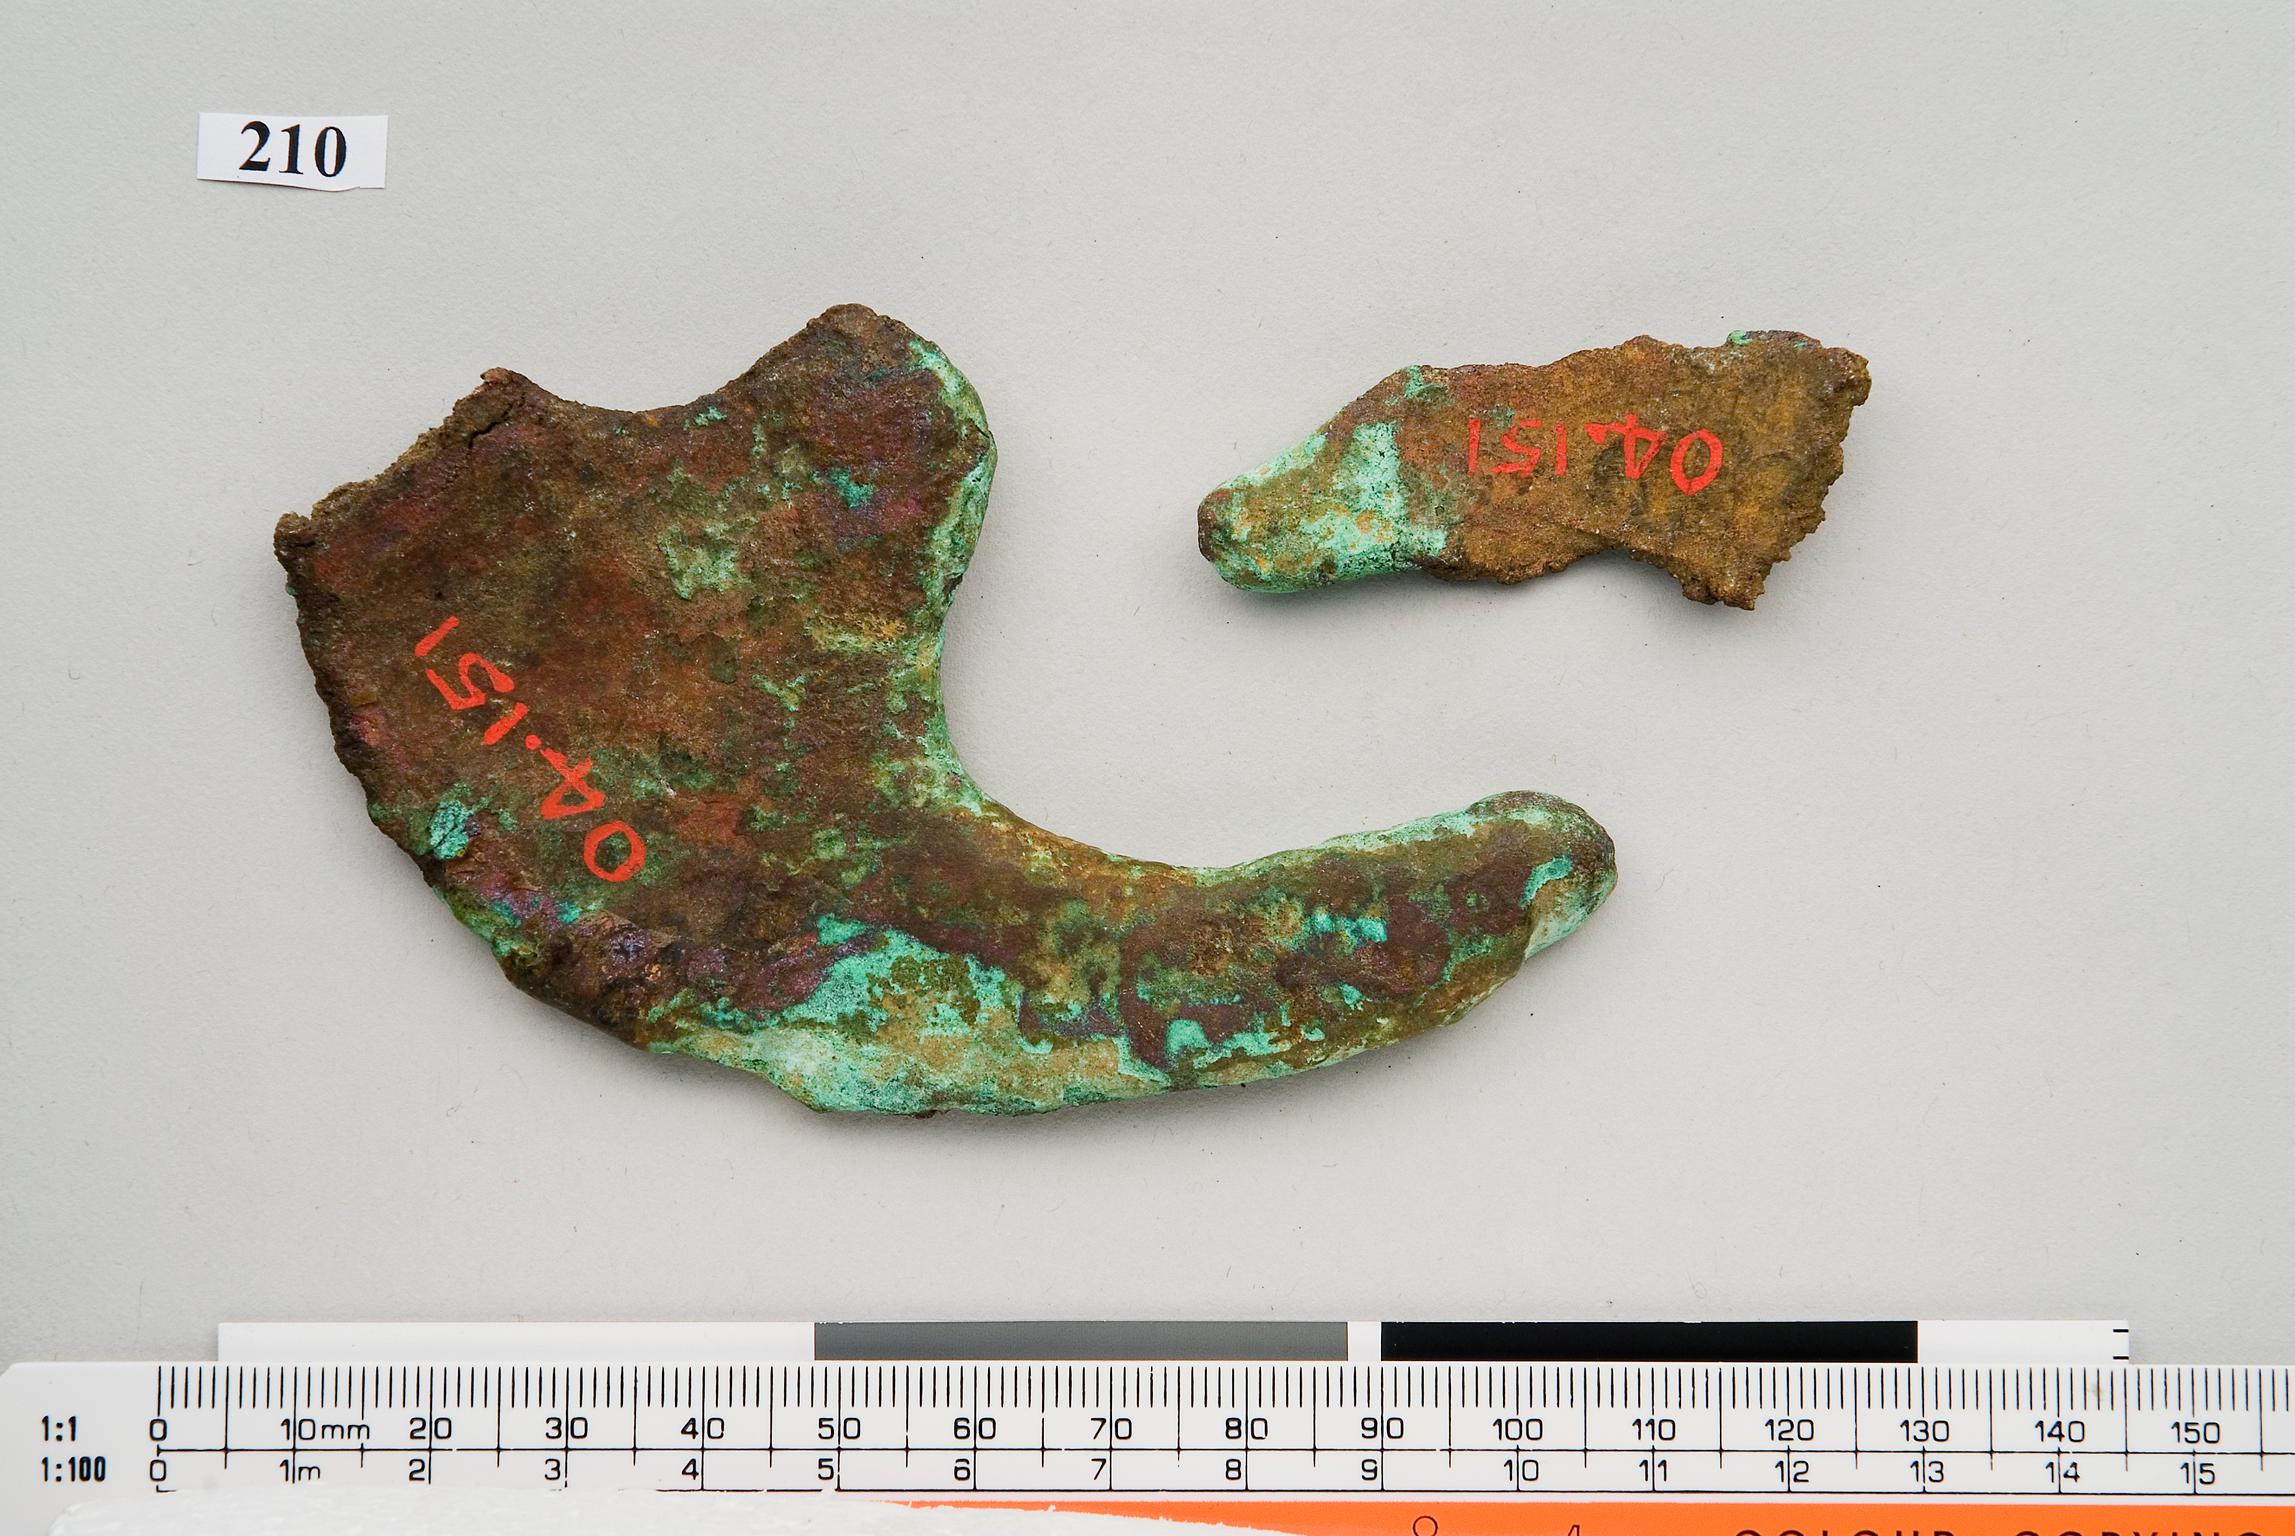 Roman copper alloy ingot